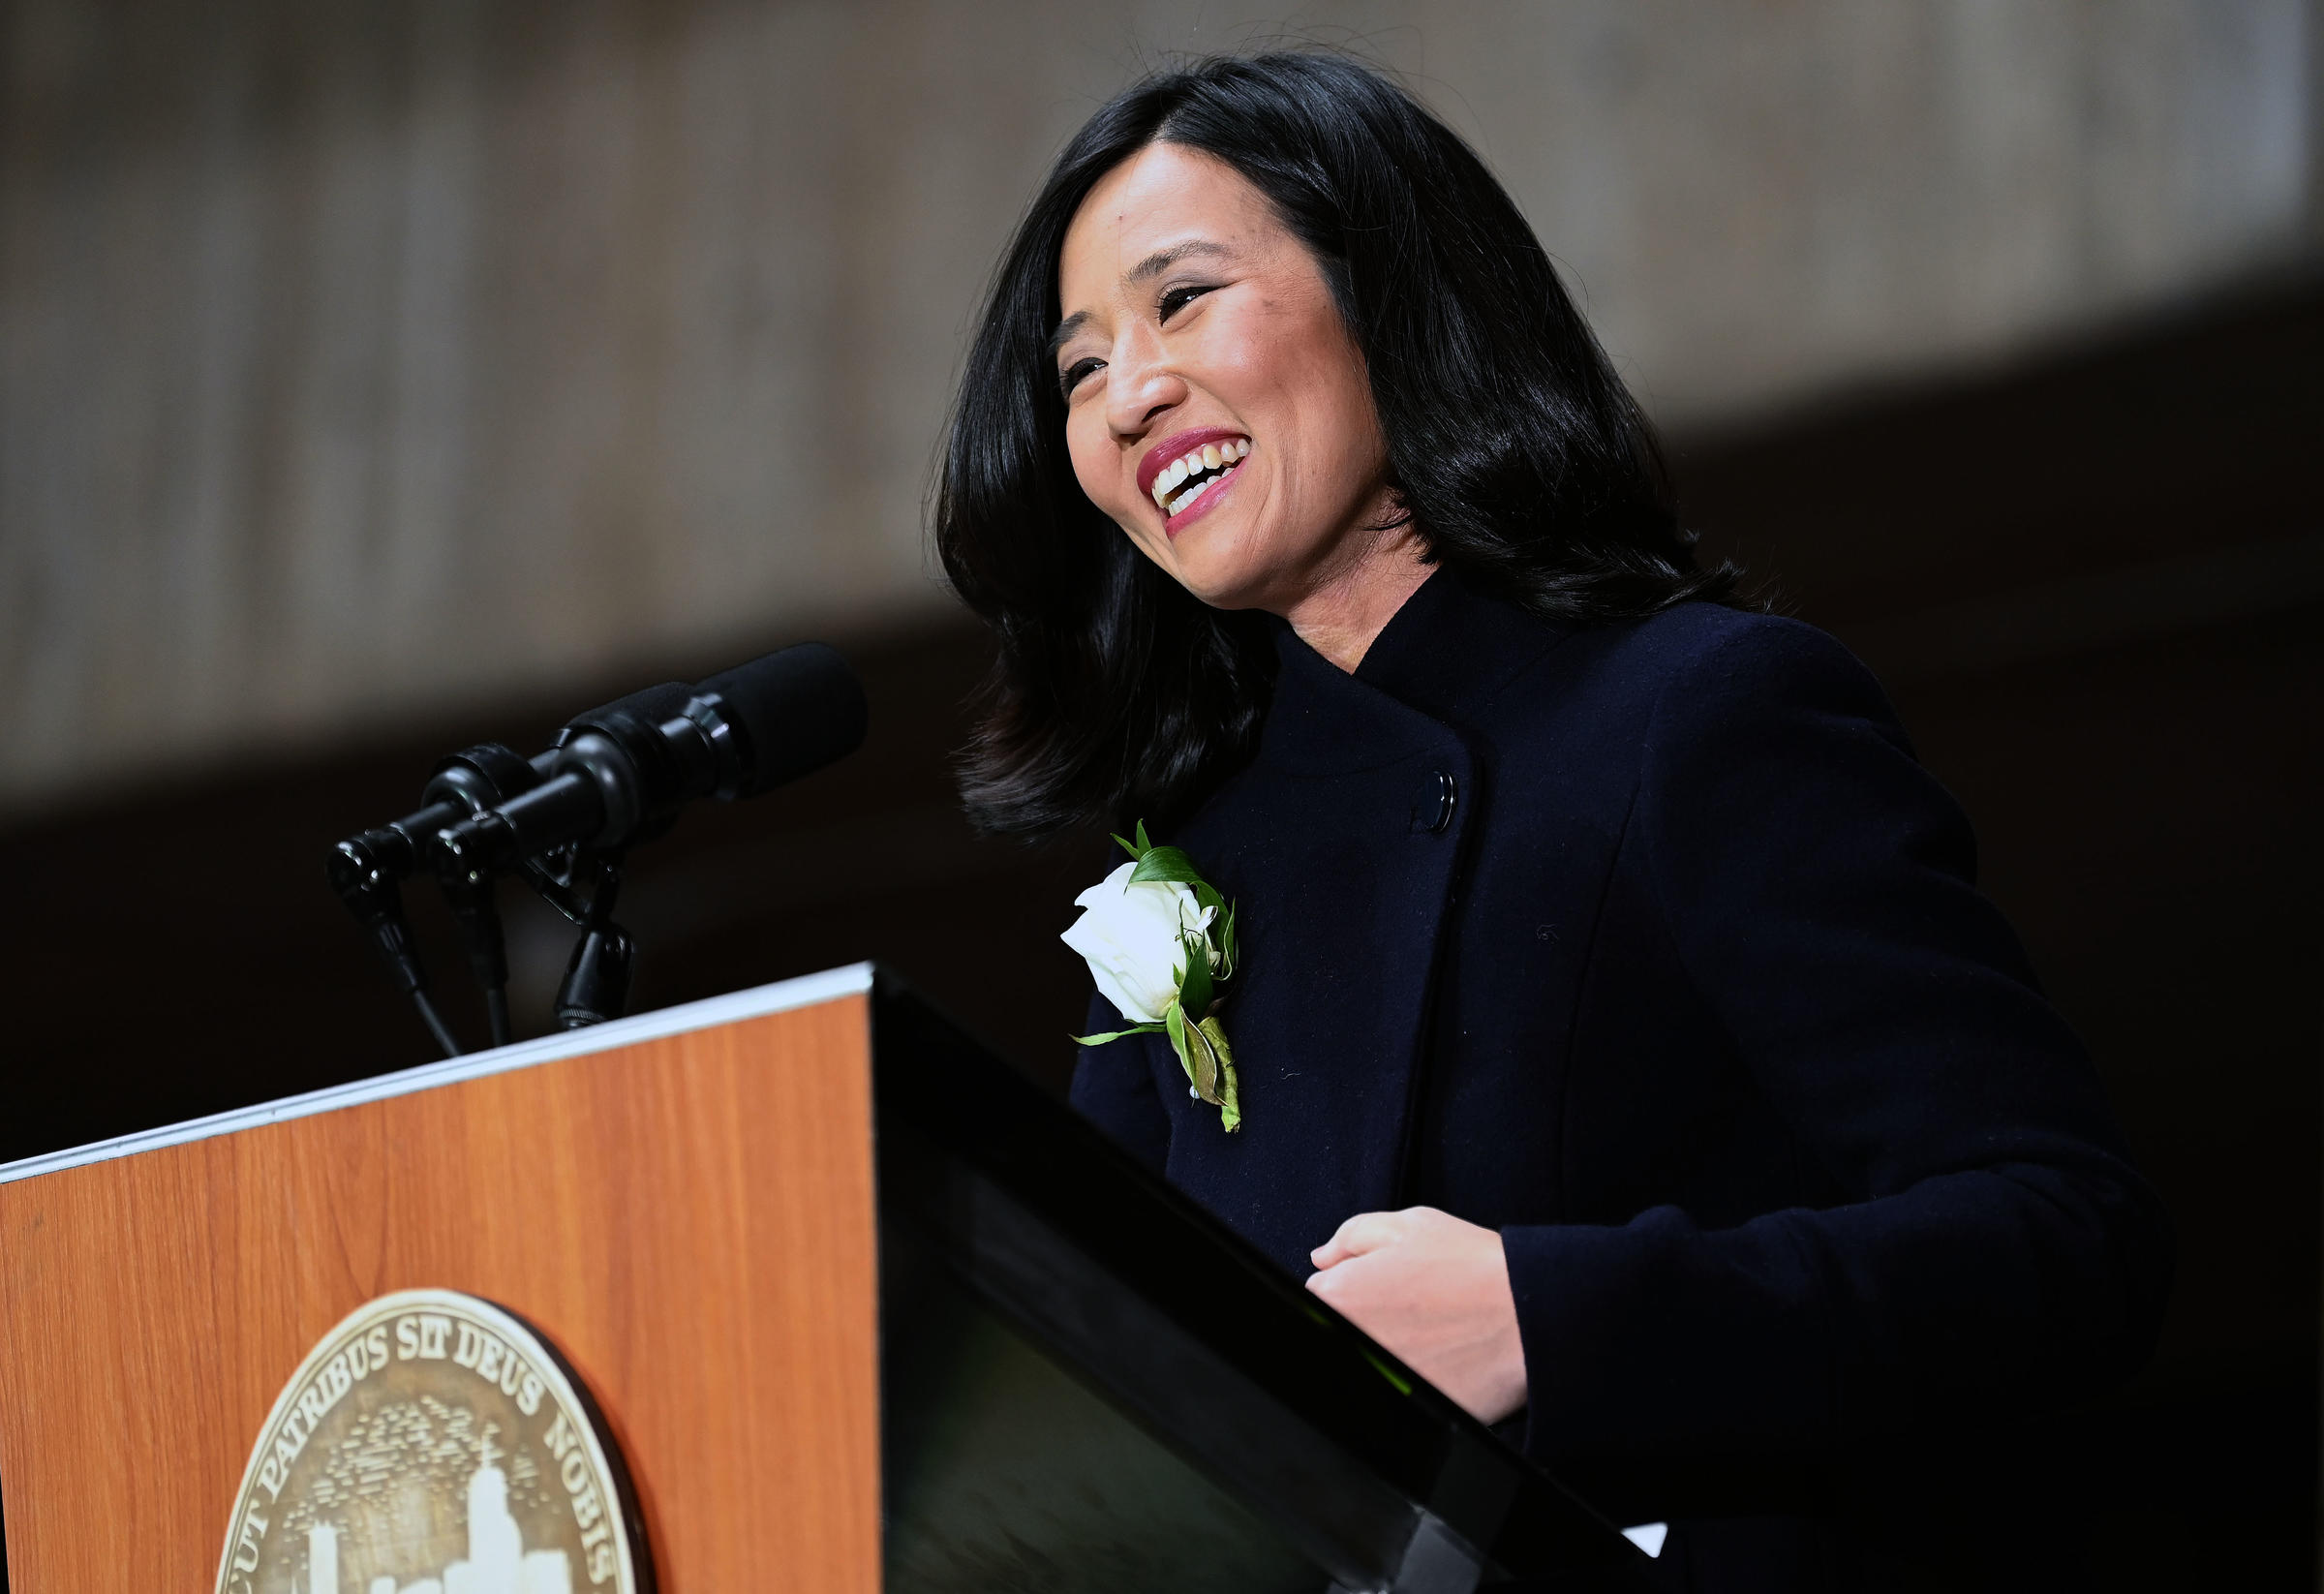 Mayor Wu smiling as she gives inaugural remarks